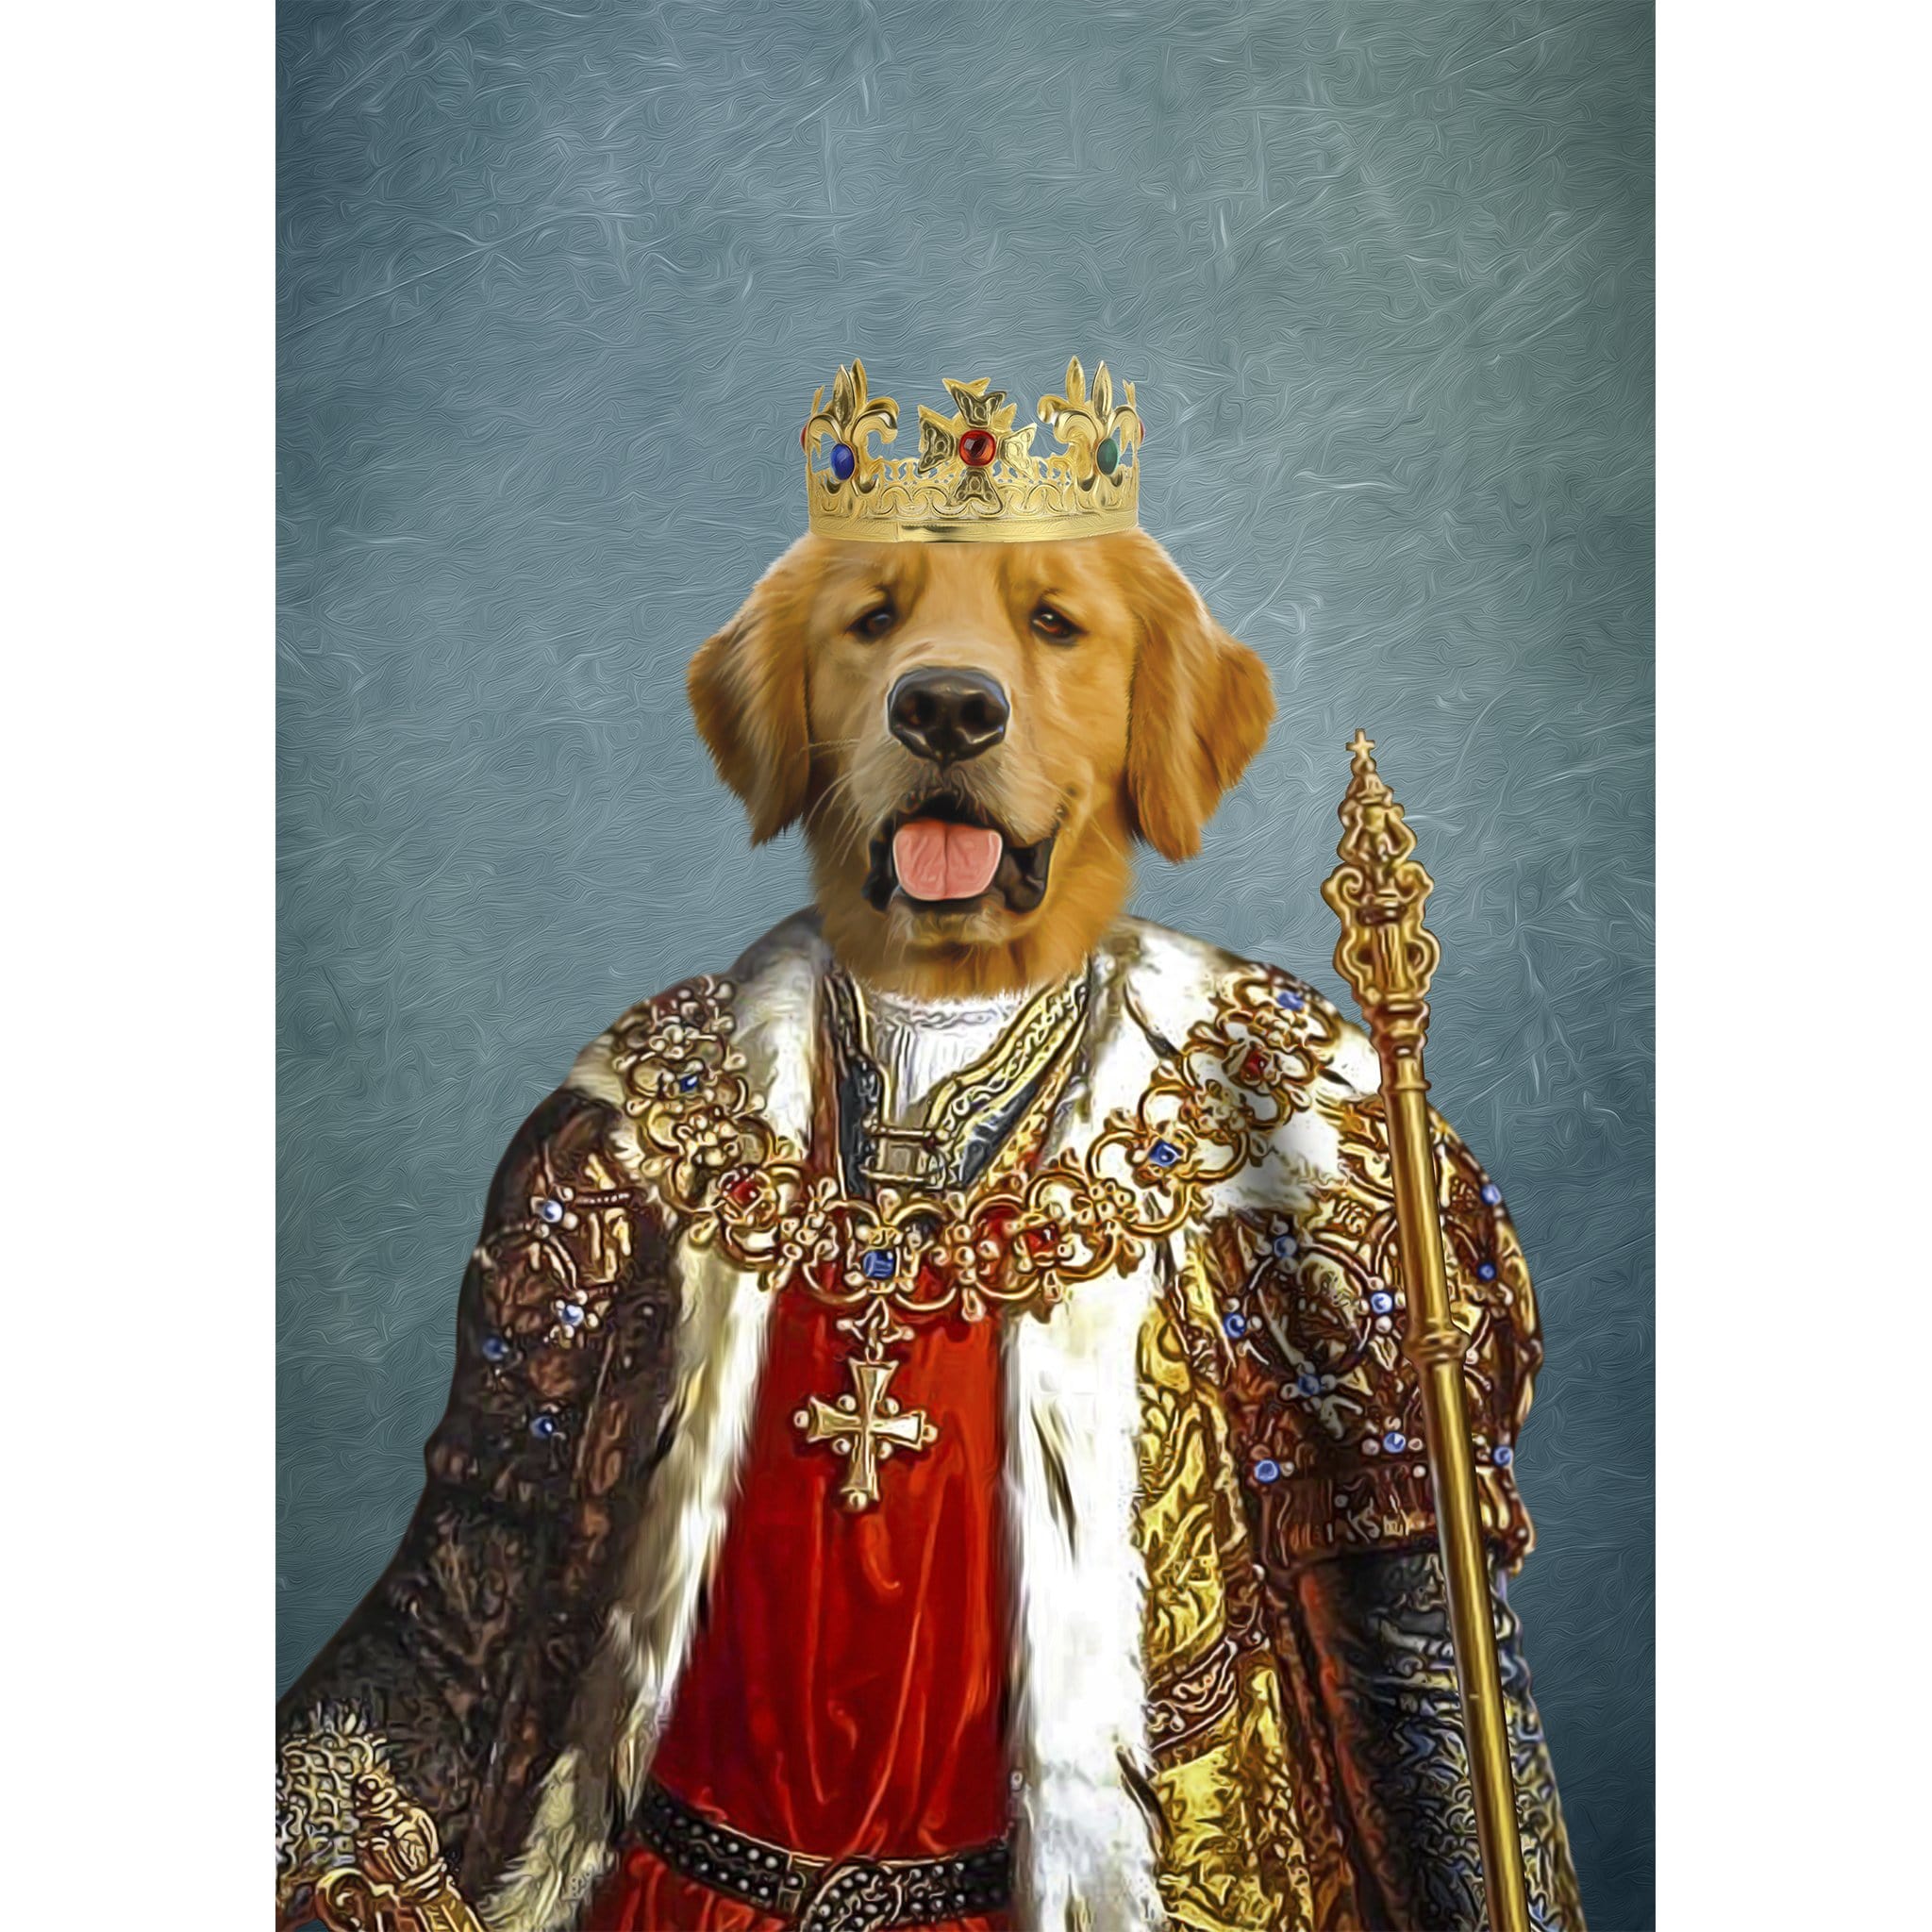 'The King' Digital Portrait